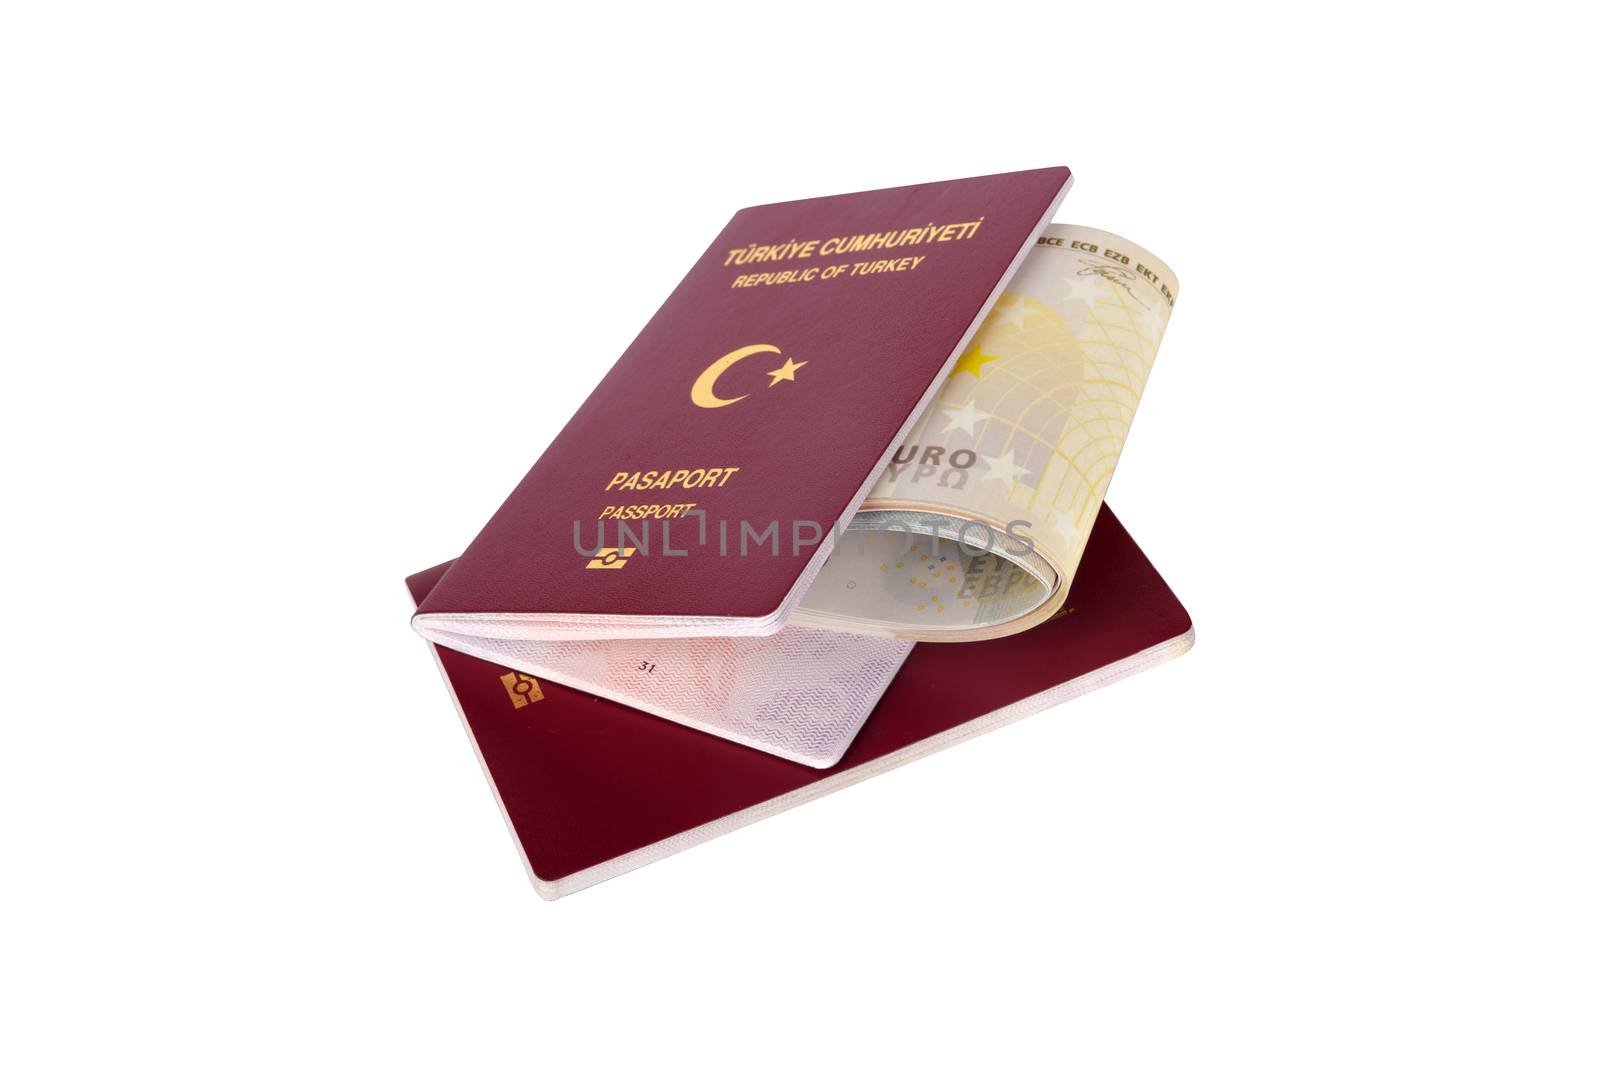 Passport and Euro Money Banknotes by niglaynike